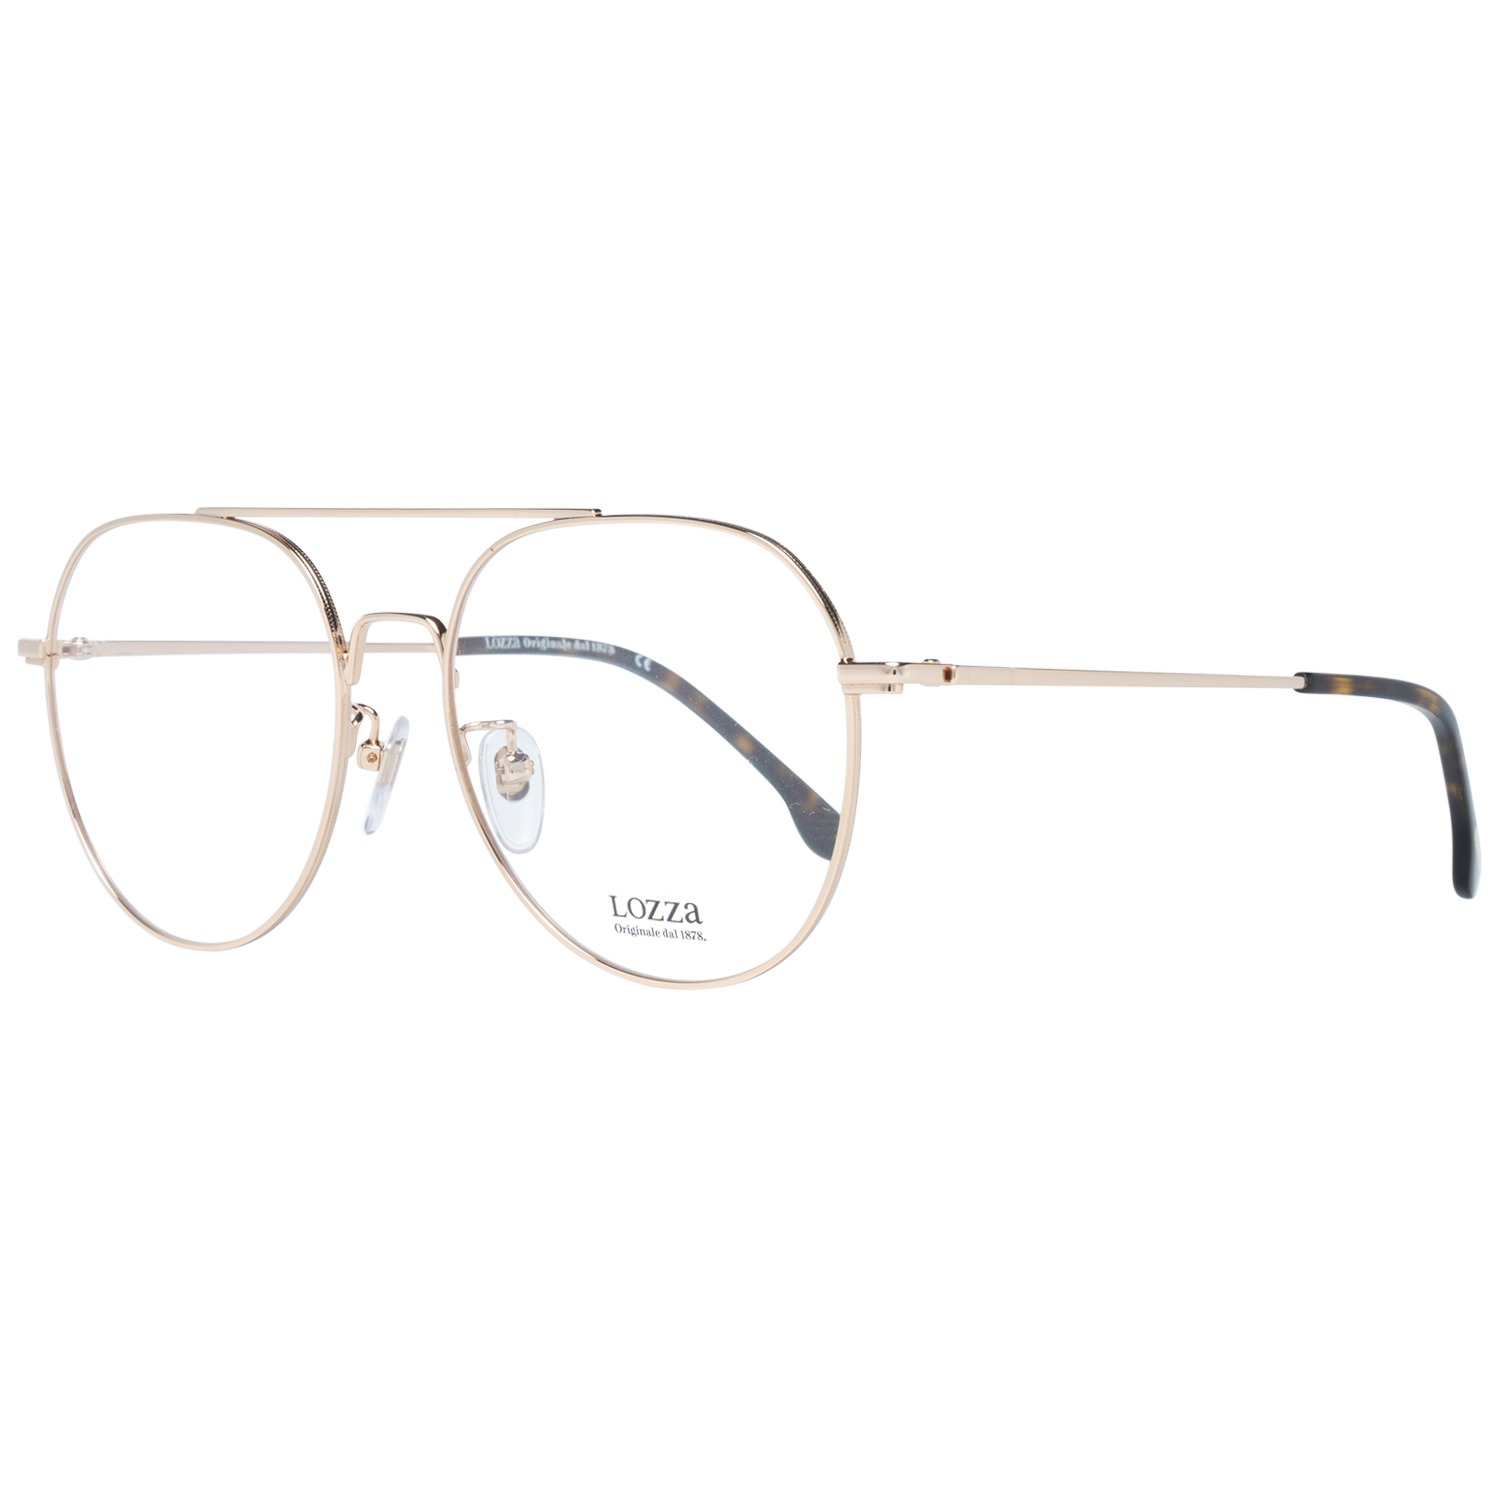 Lozza Frames Lozza Optical Frame VL2330V 0300 55 Eyeglasses Eyewear UK USA Australia 